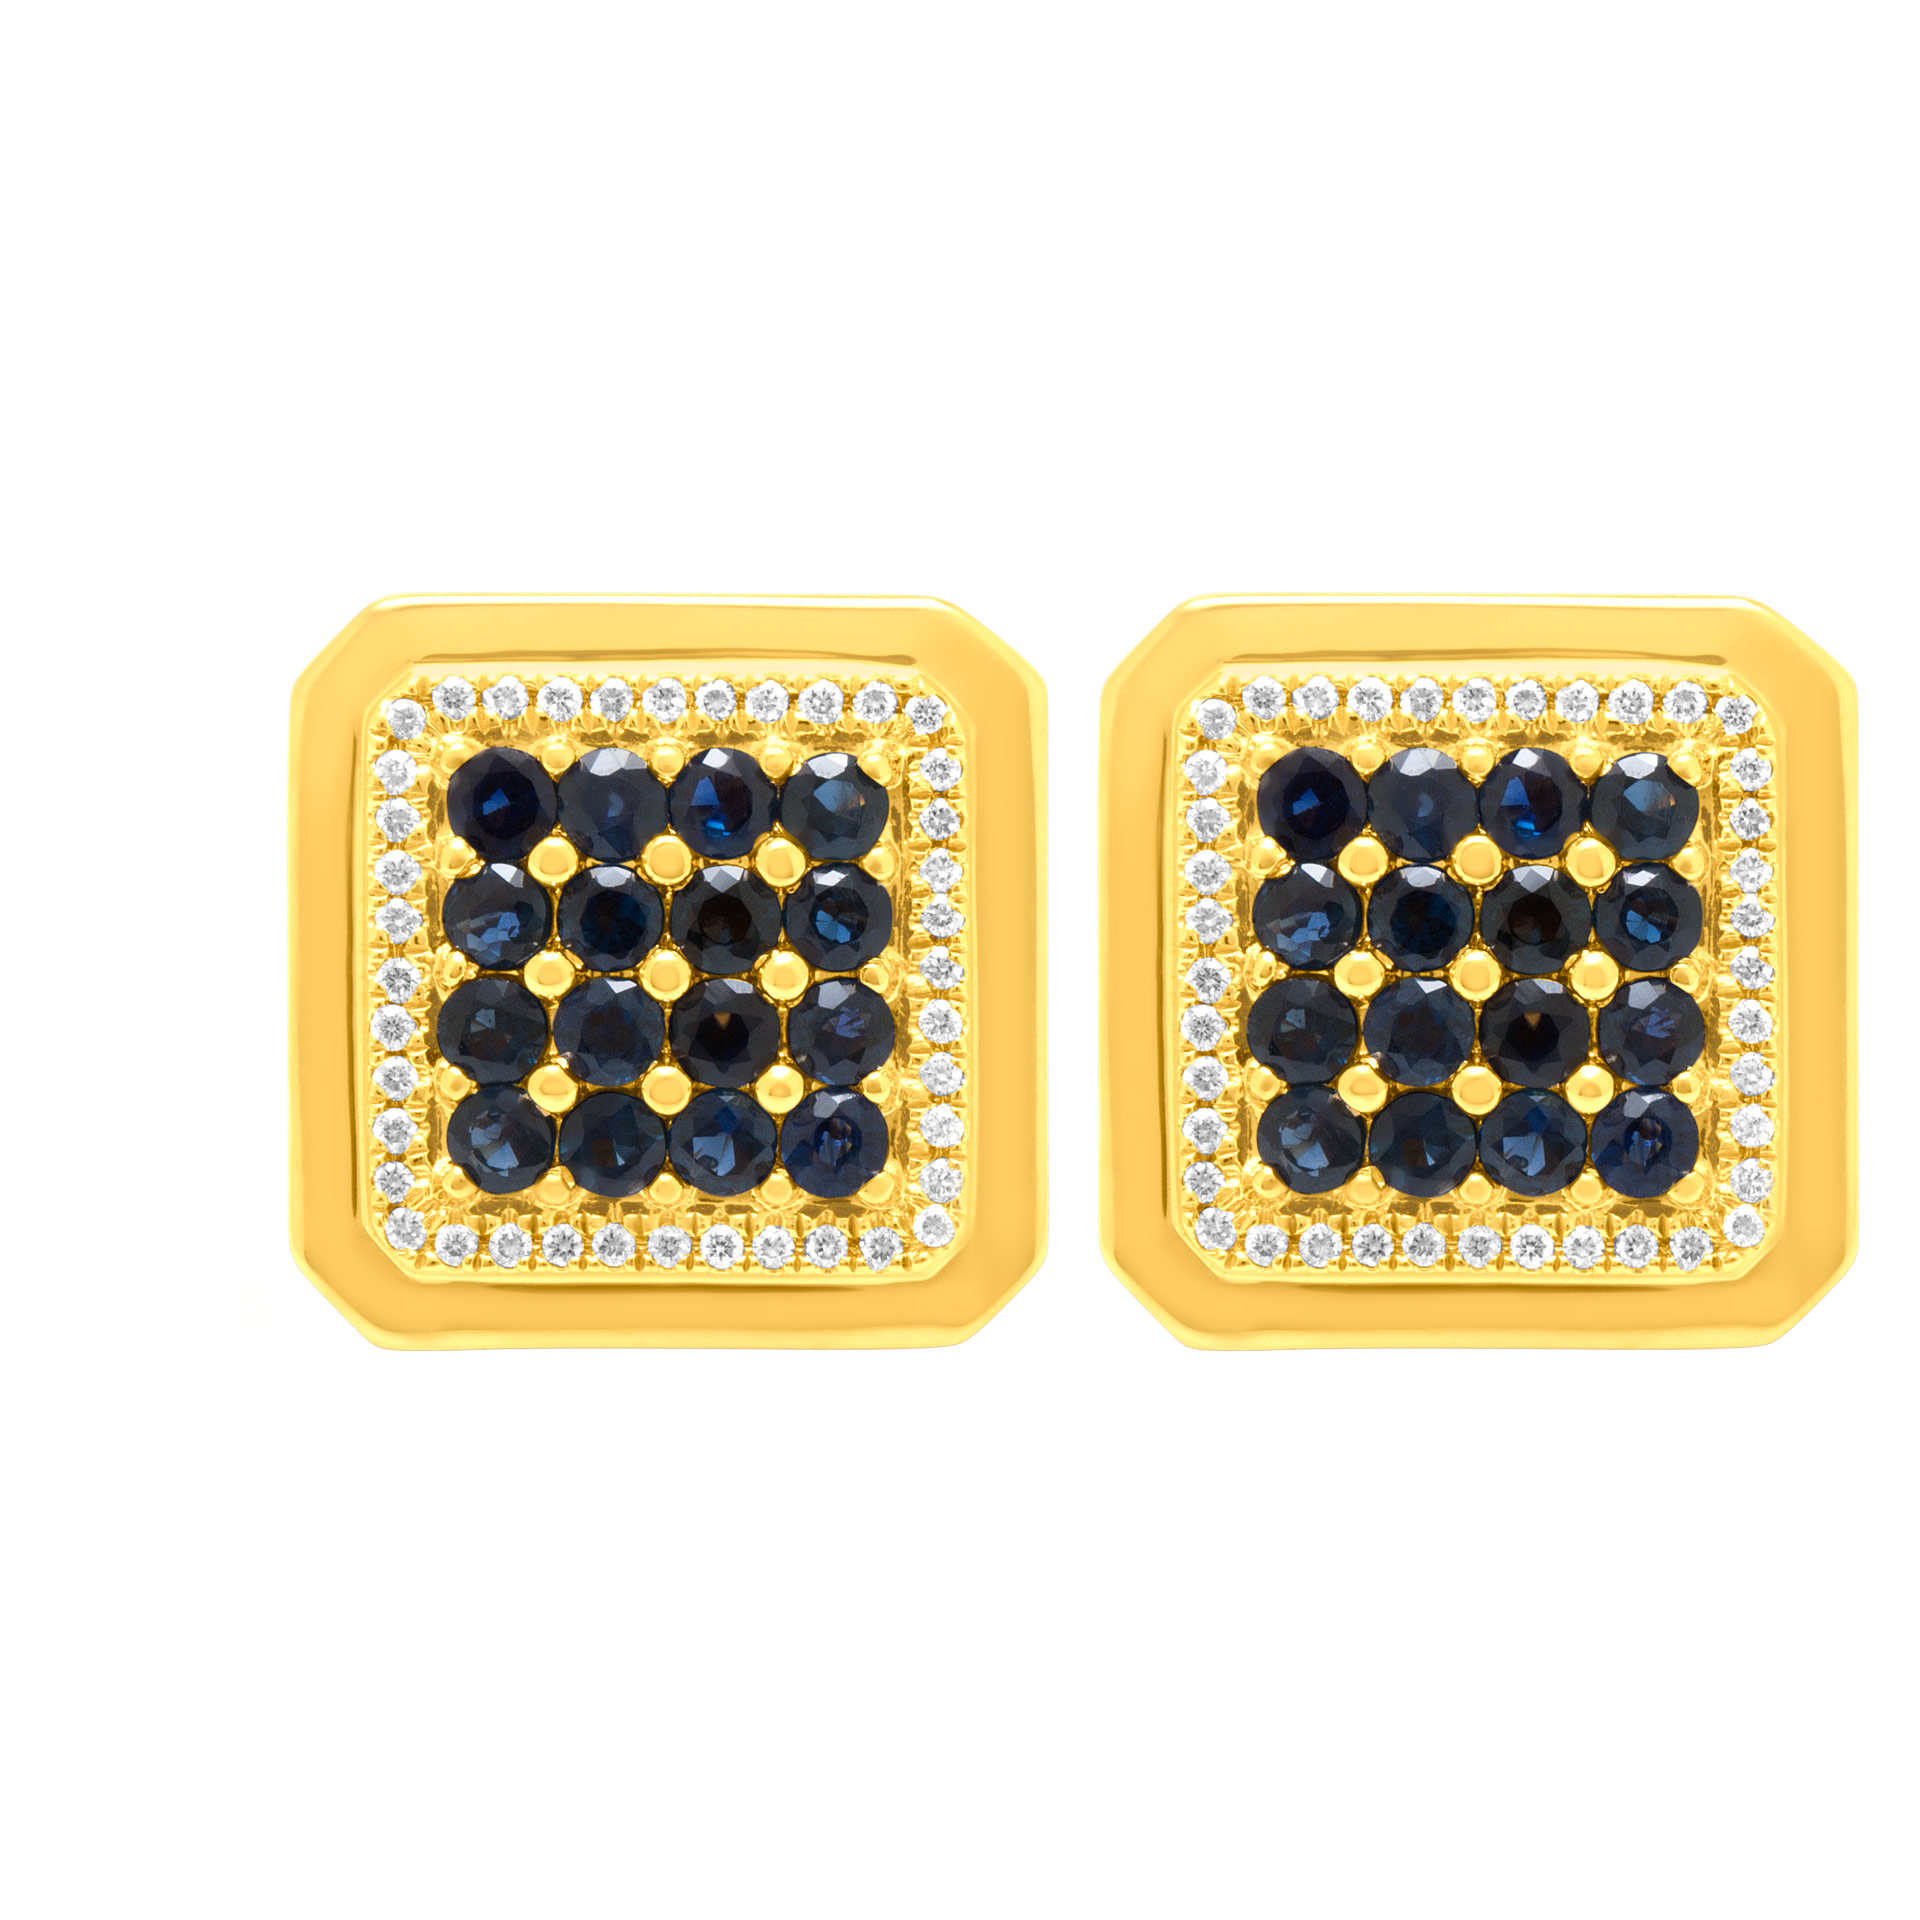 Sapphire & diamond cufflinks in 18k yellow gold